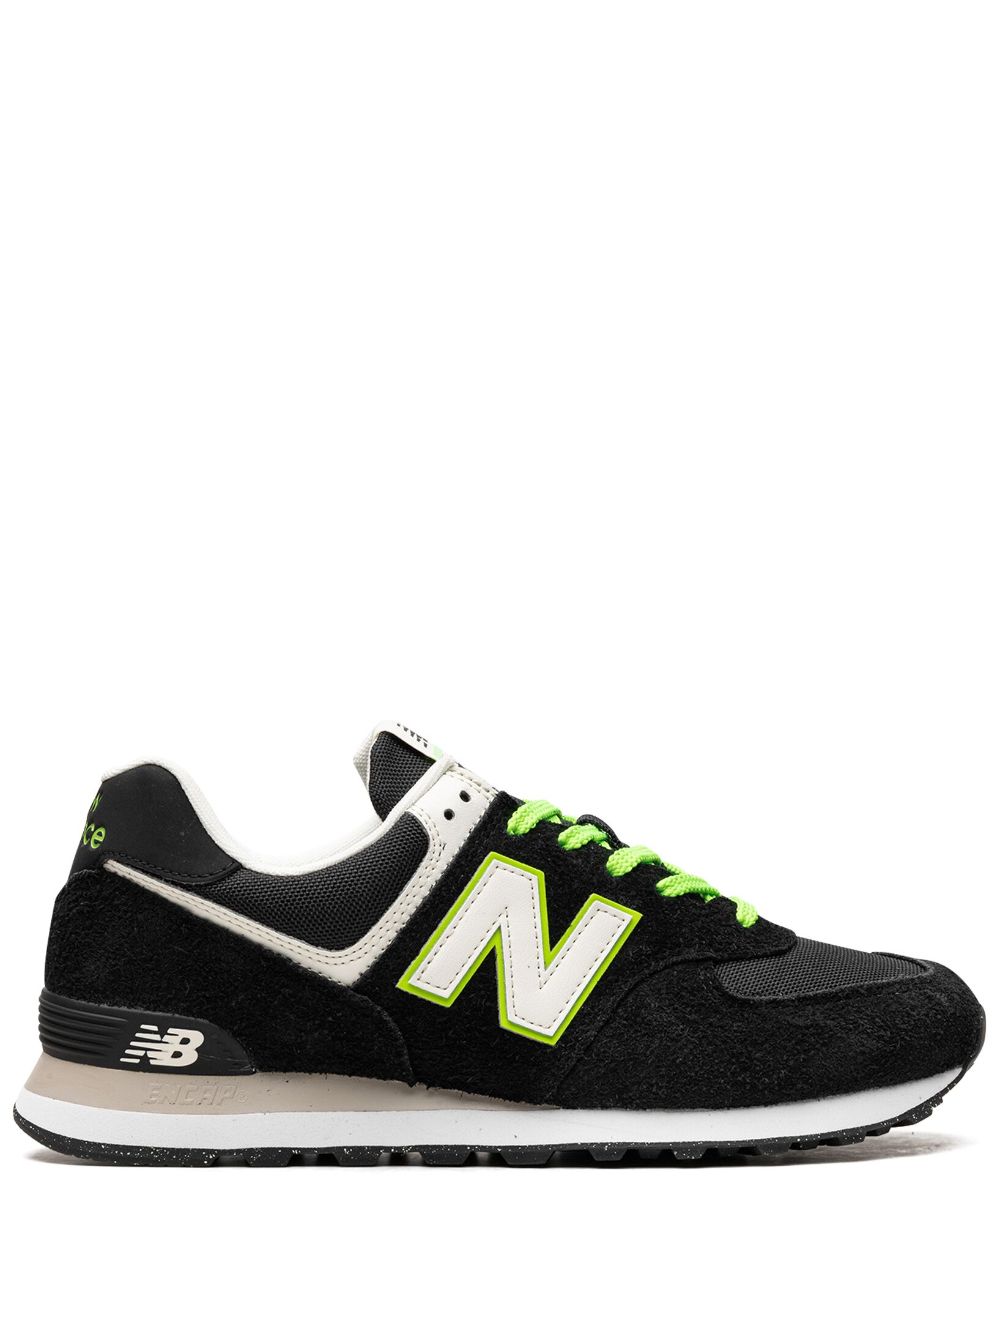 New Balance 574 "Black/White/Green" sneakers